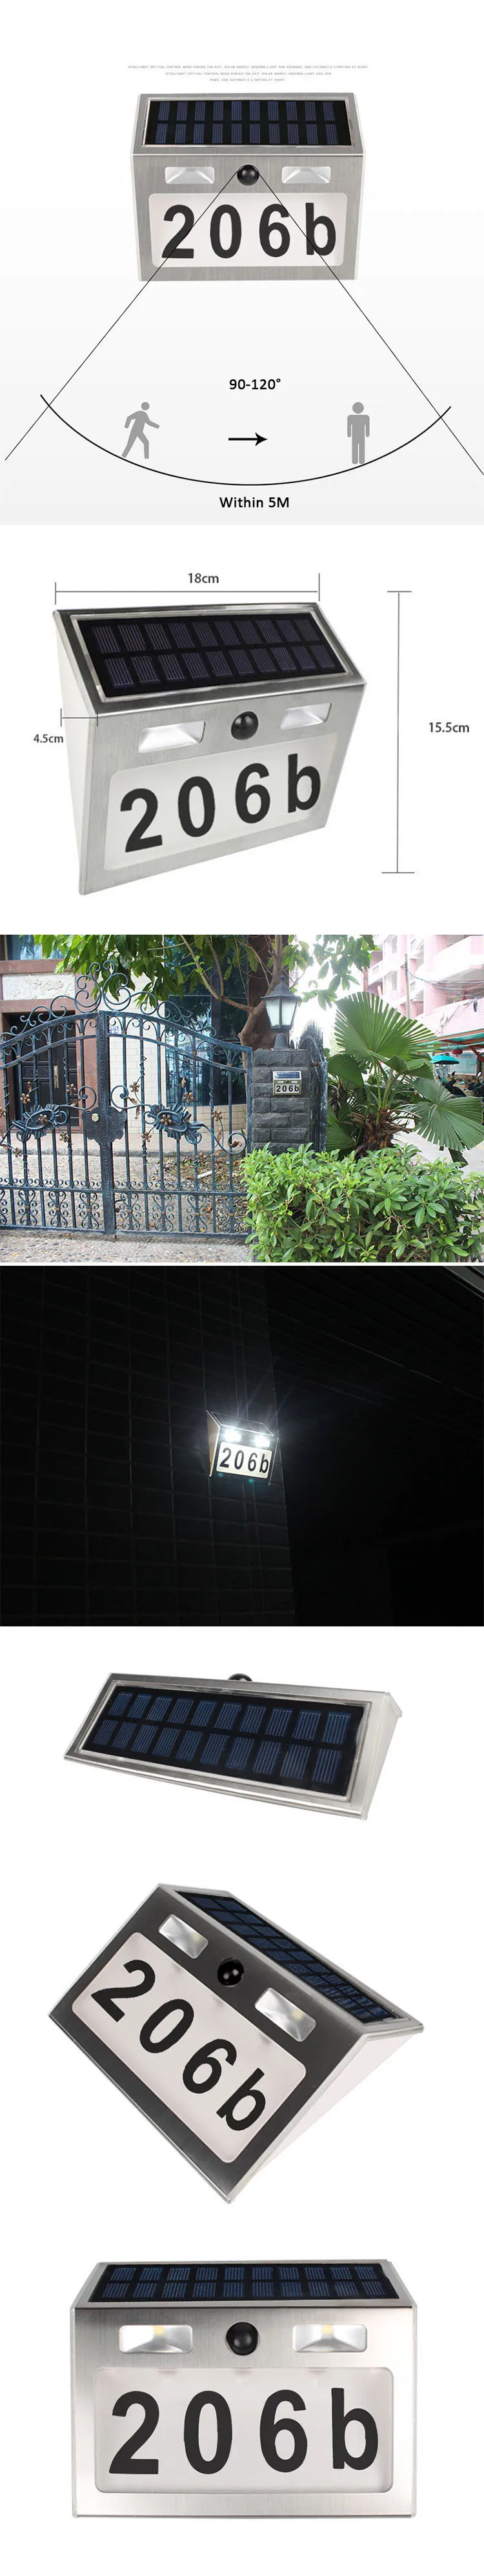 Solar Stainless Steel Led Address Number White Light Illumination Doorplate House Number